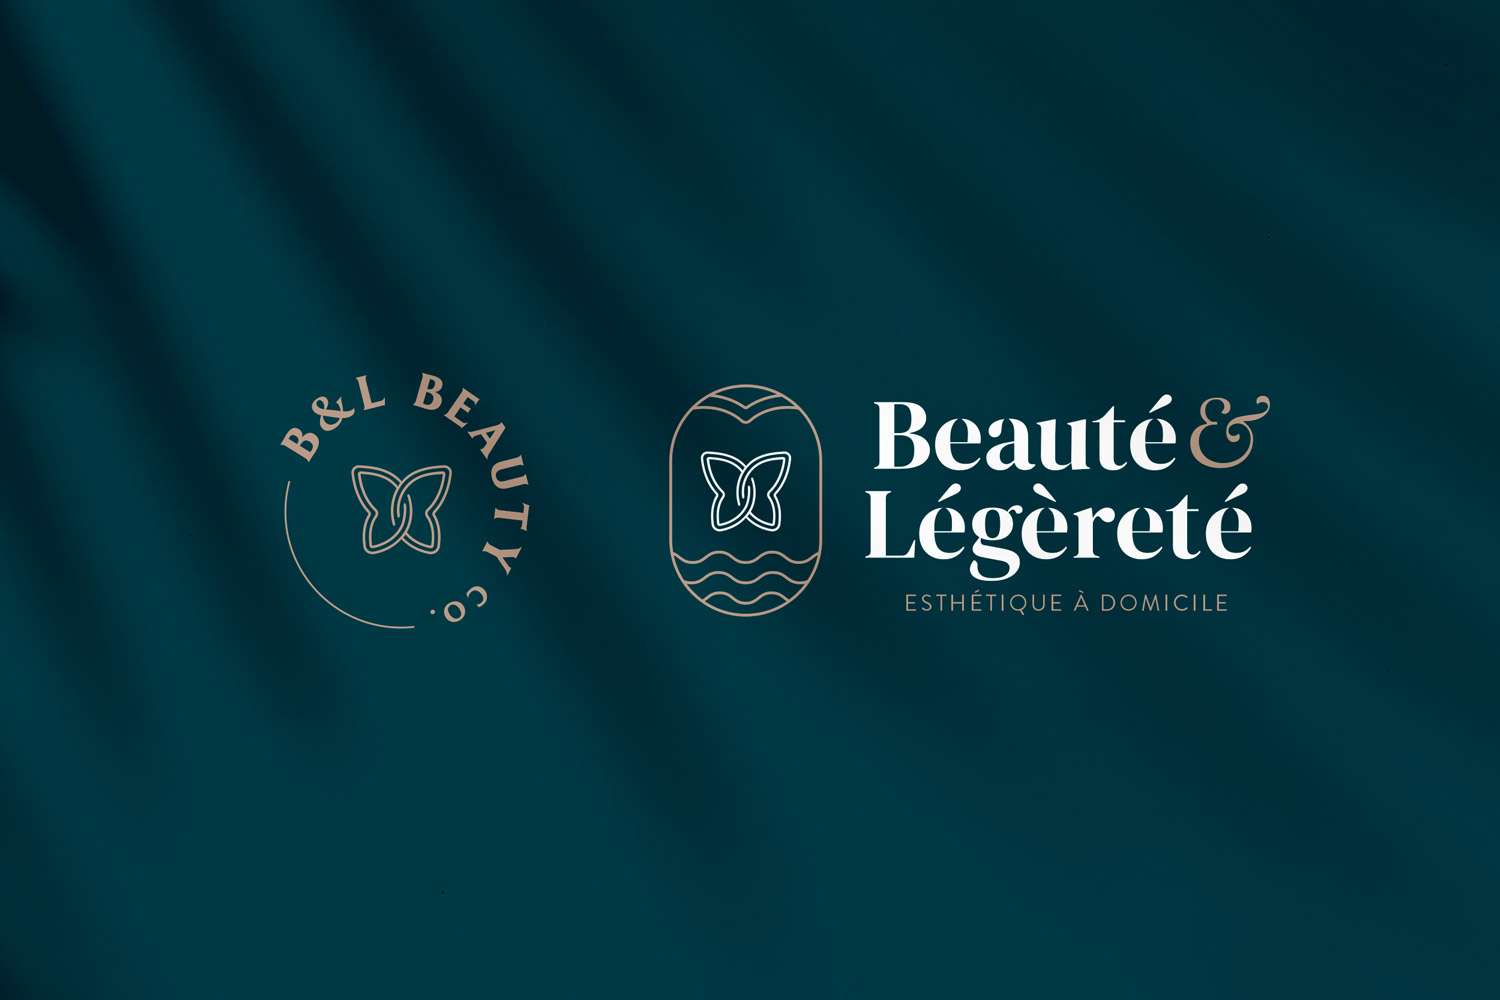 beaute et legerete beautician beauty center logo design and branding mockup